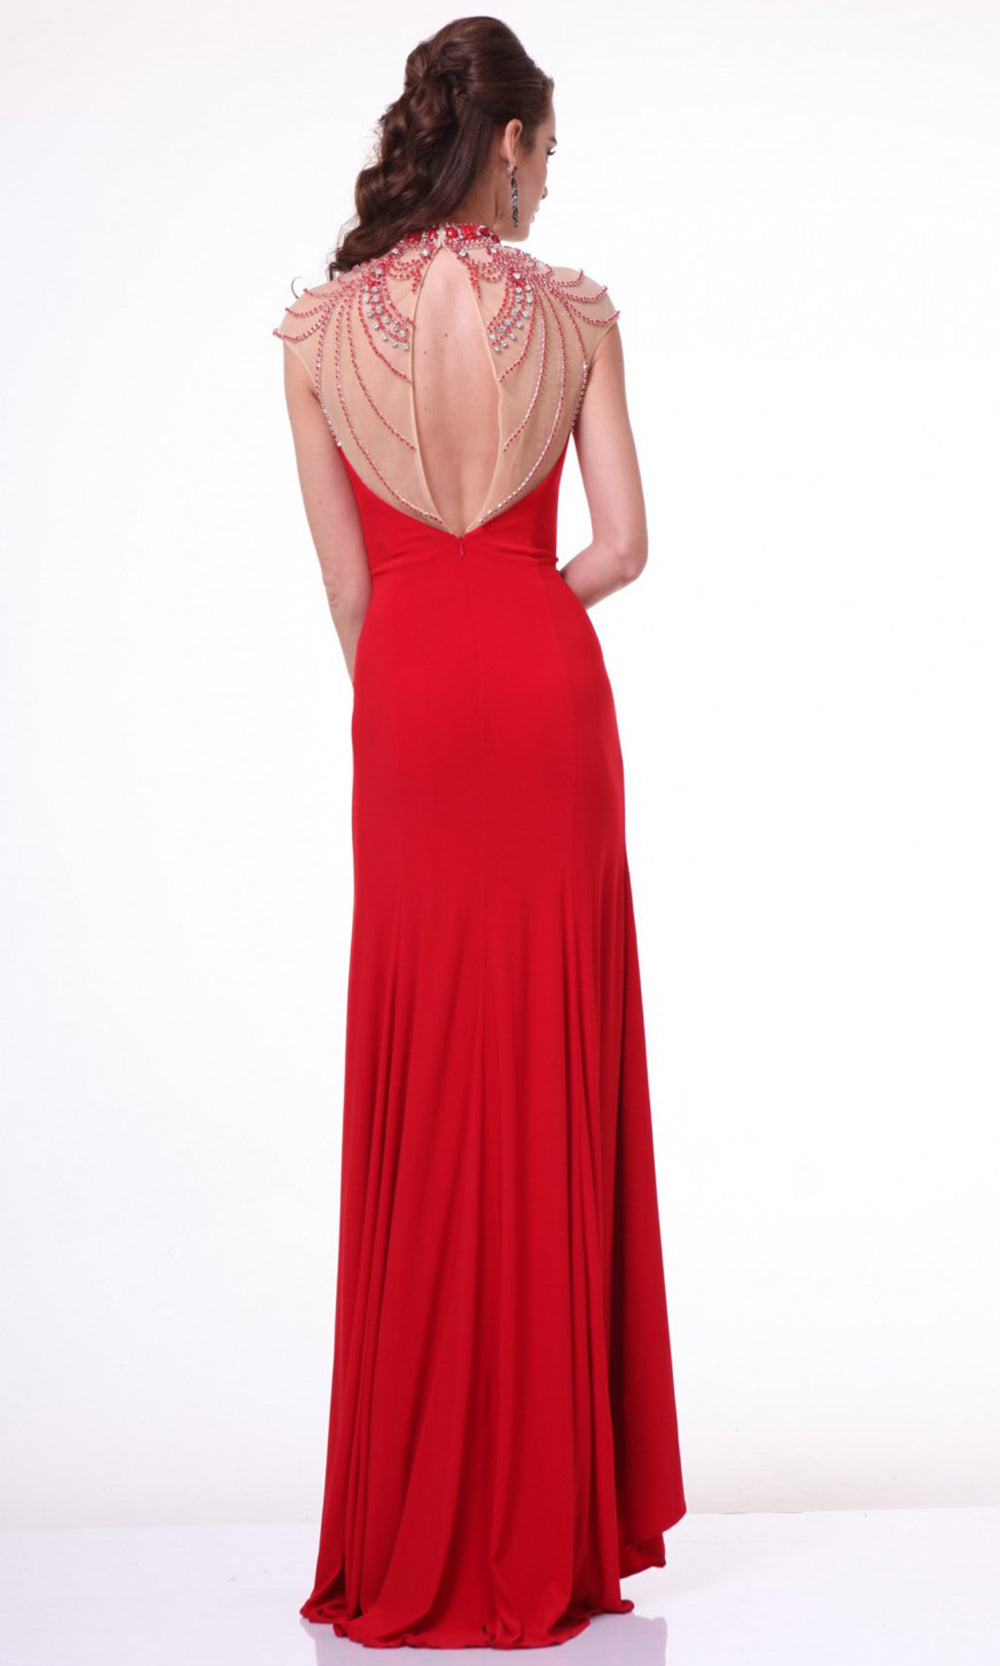 Cinderella Divine - 8105 Beaded Illusion Sheath Dress In Red